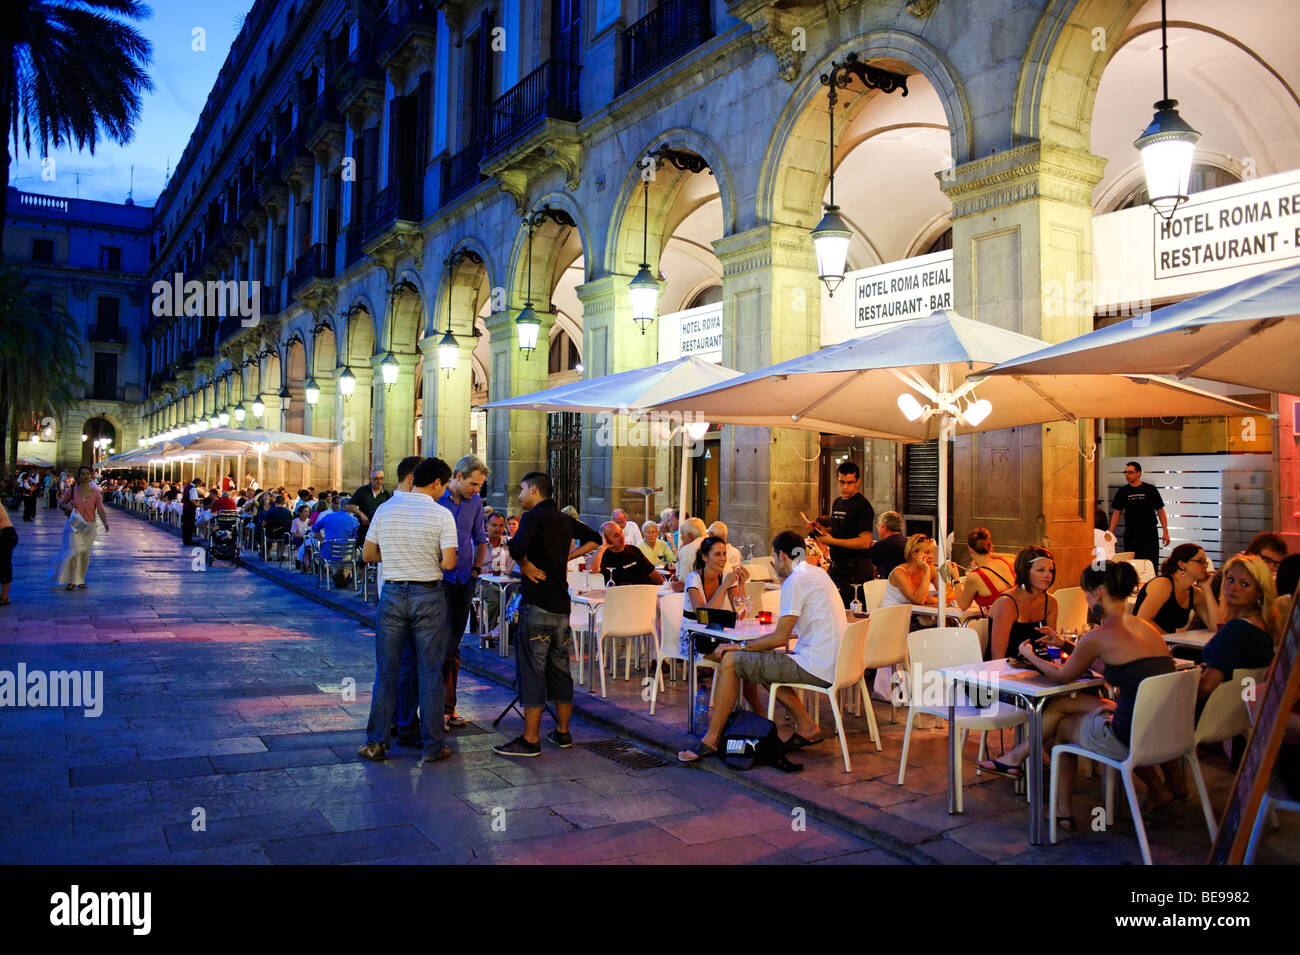 People dining alfresco on Plaza Reial. Barcelona. Spain Stock Photo